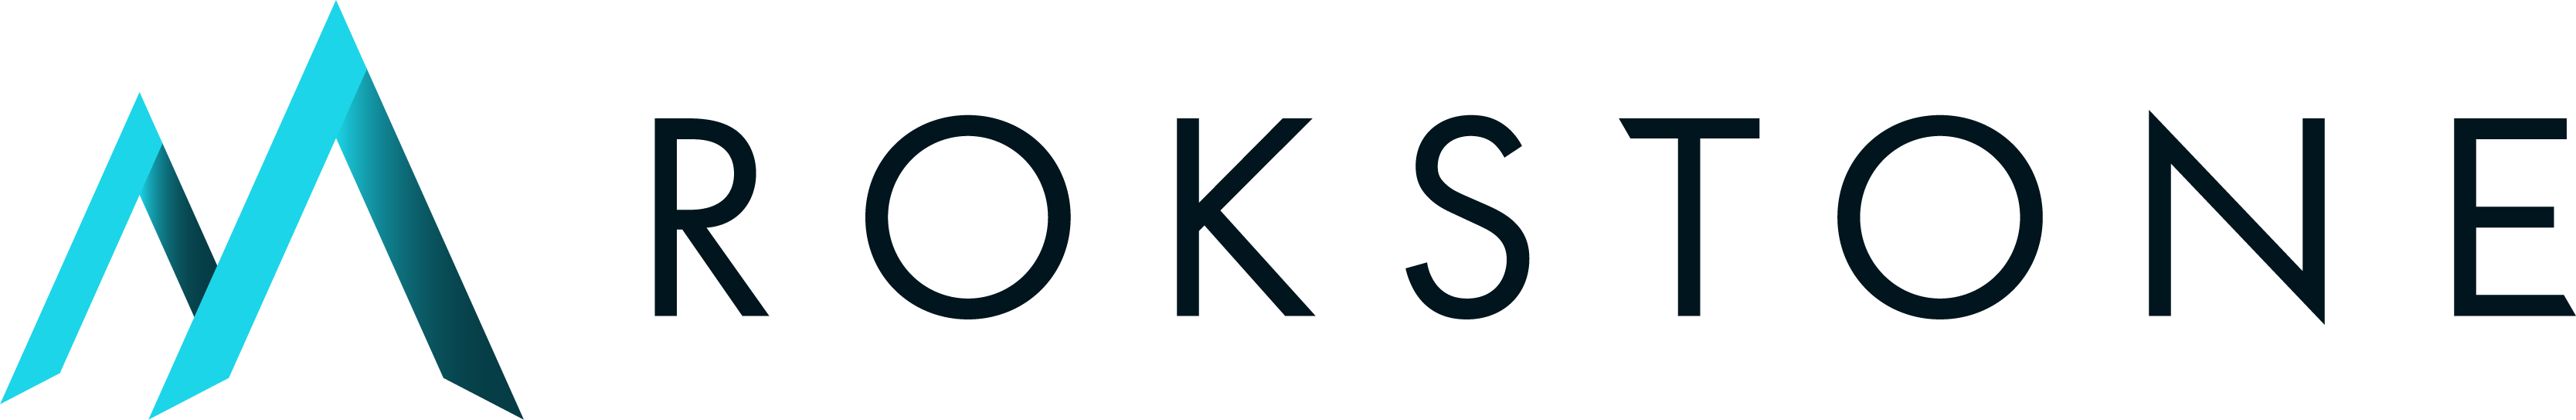 Rokstone logo